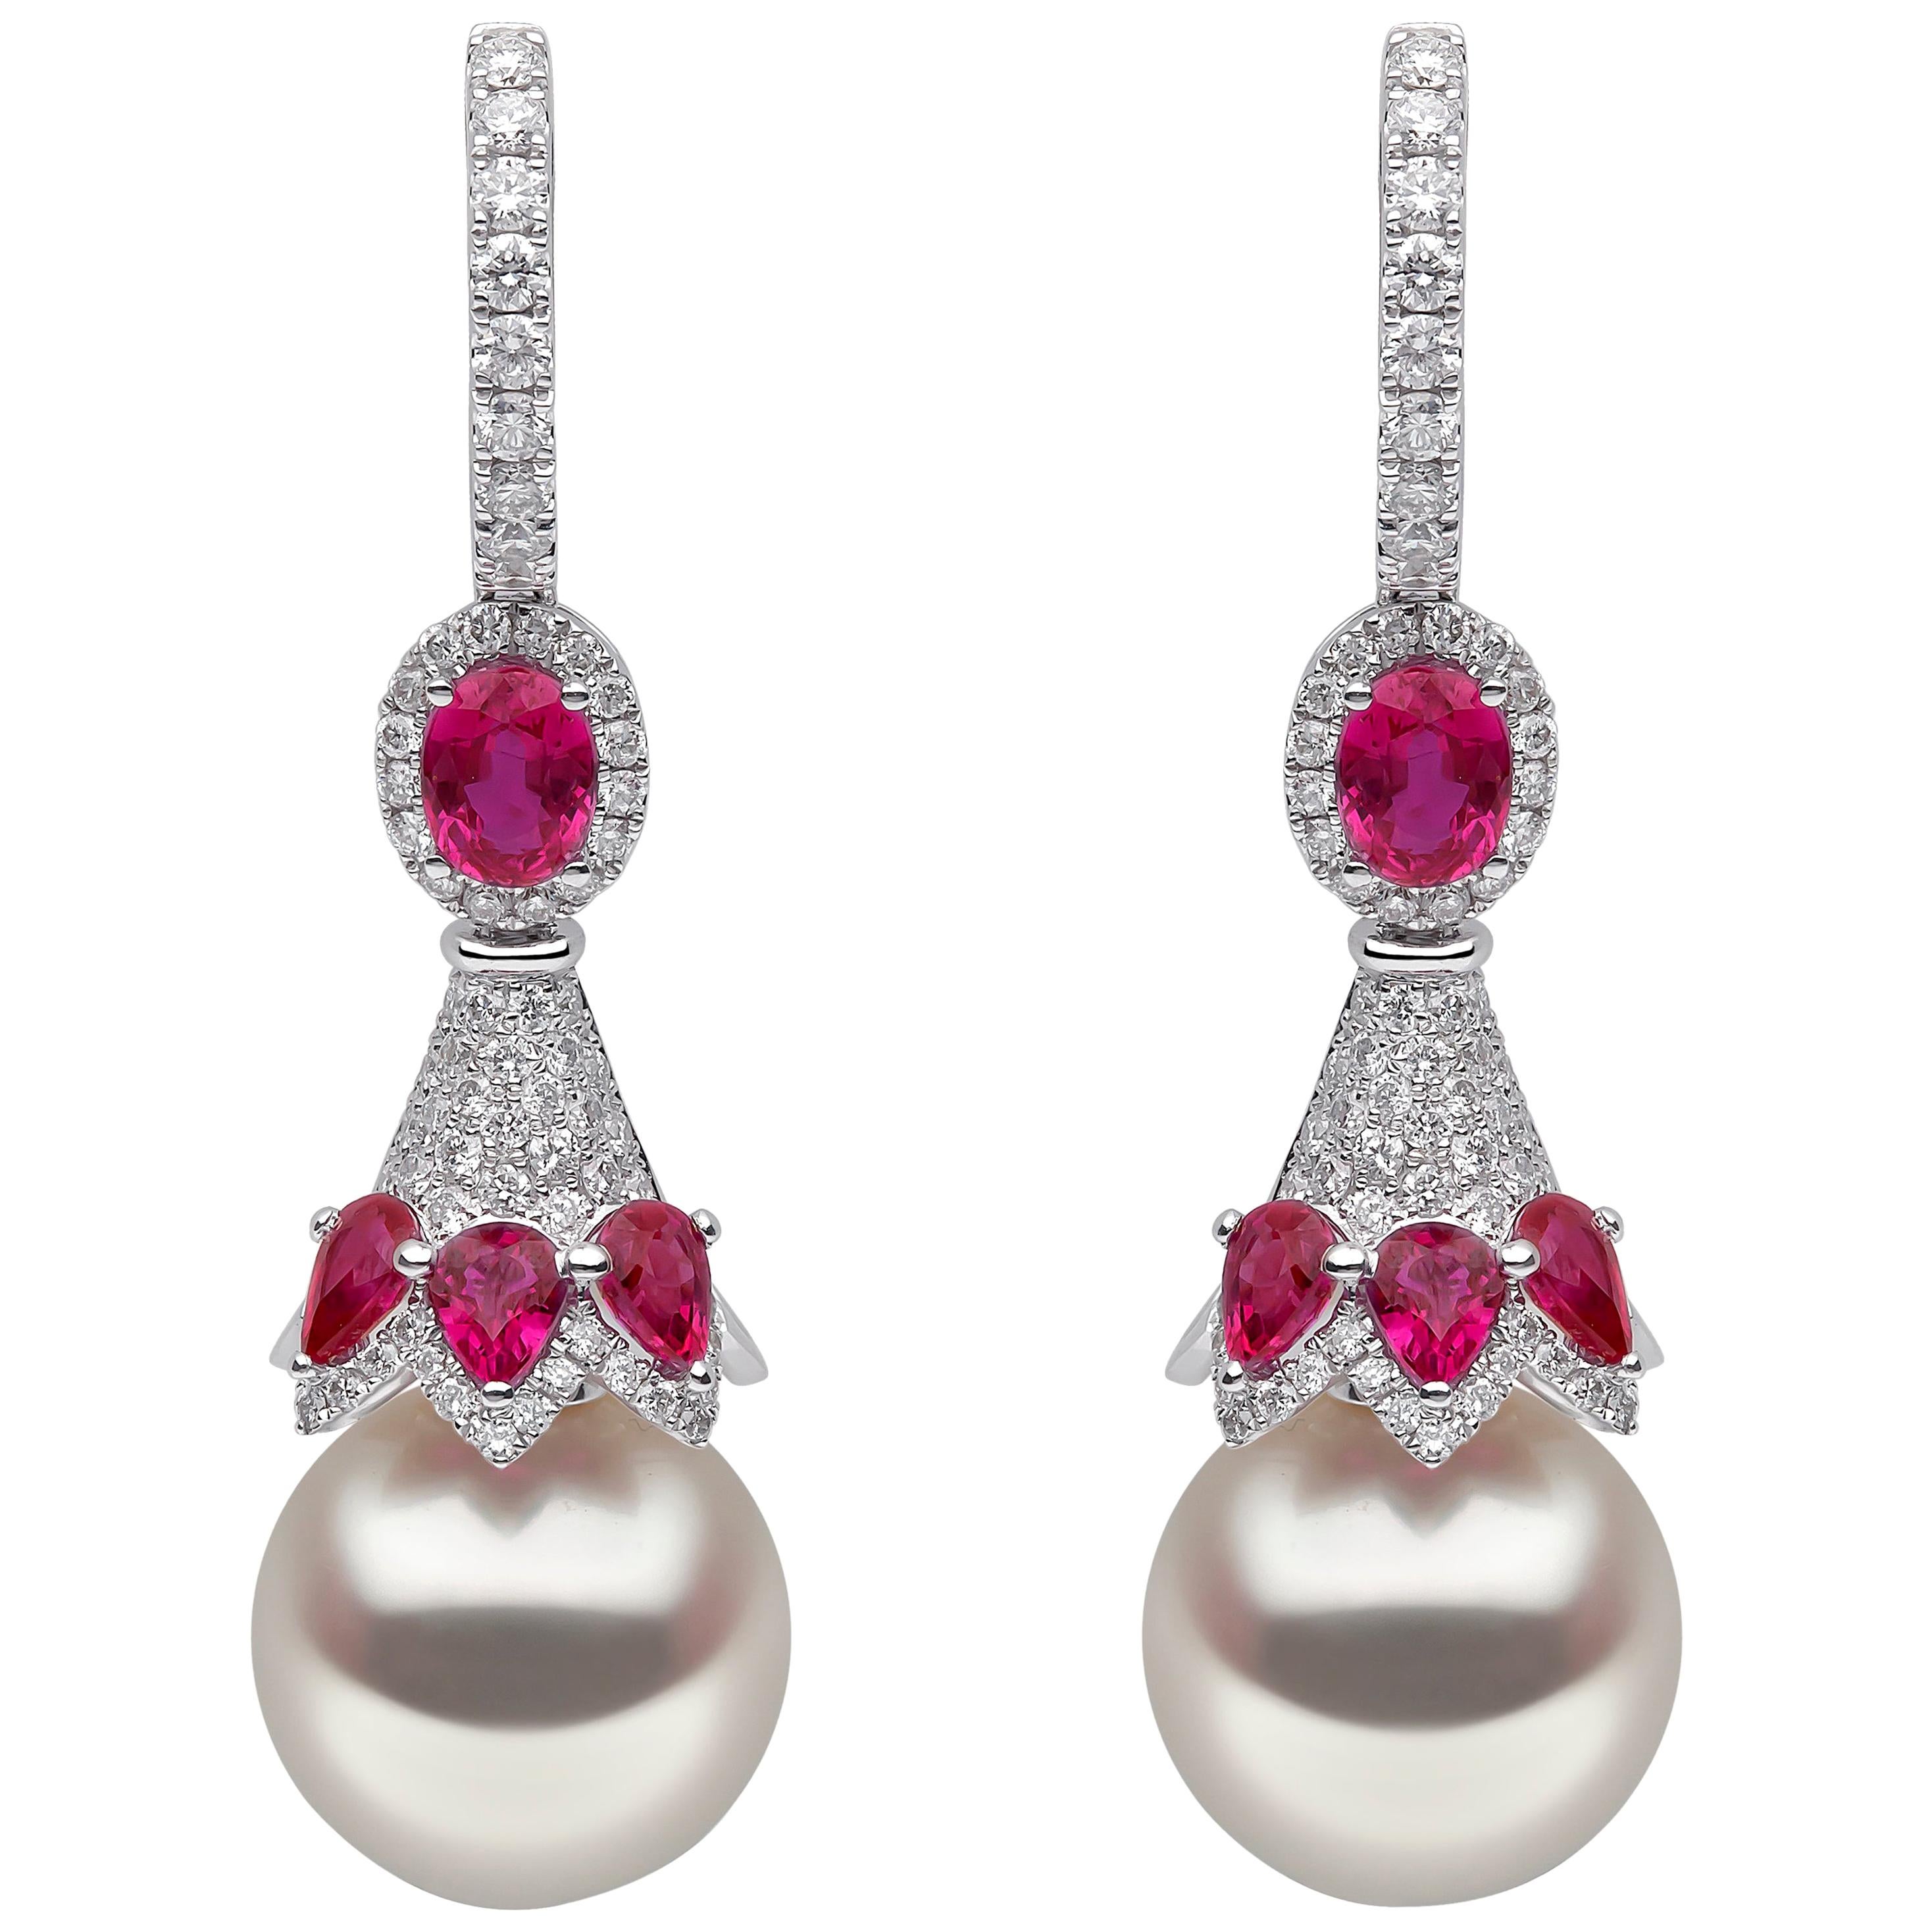 Yoko London South Sea Pearl, Diamond and Ruby Earrings in 18 Karat White Gold